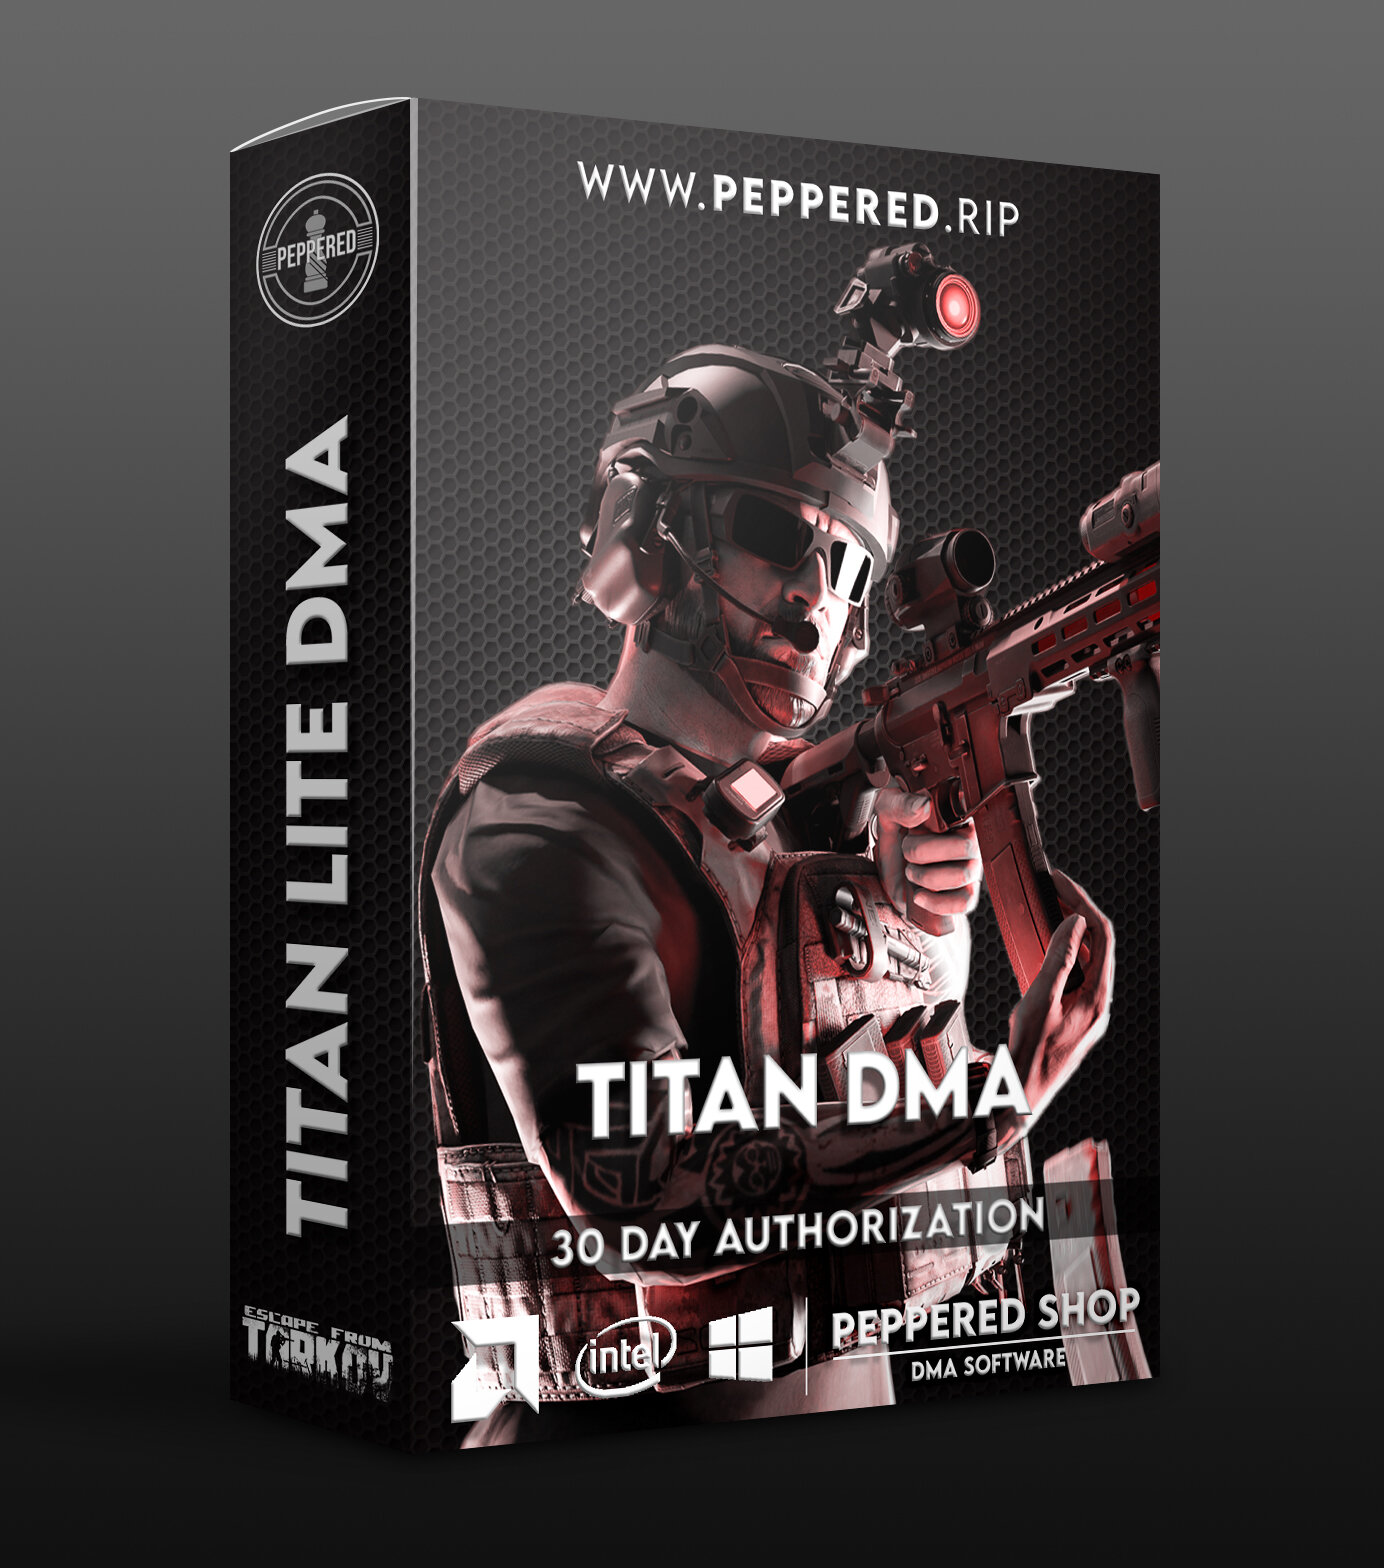 More information about "TITAN LITE - DMA "